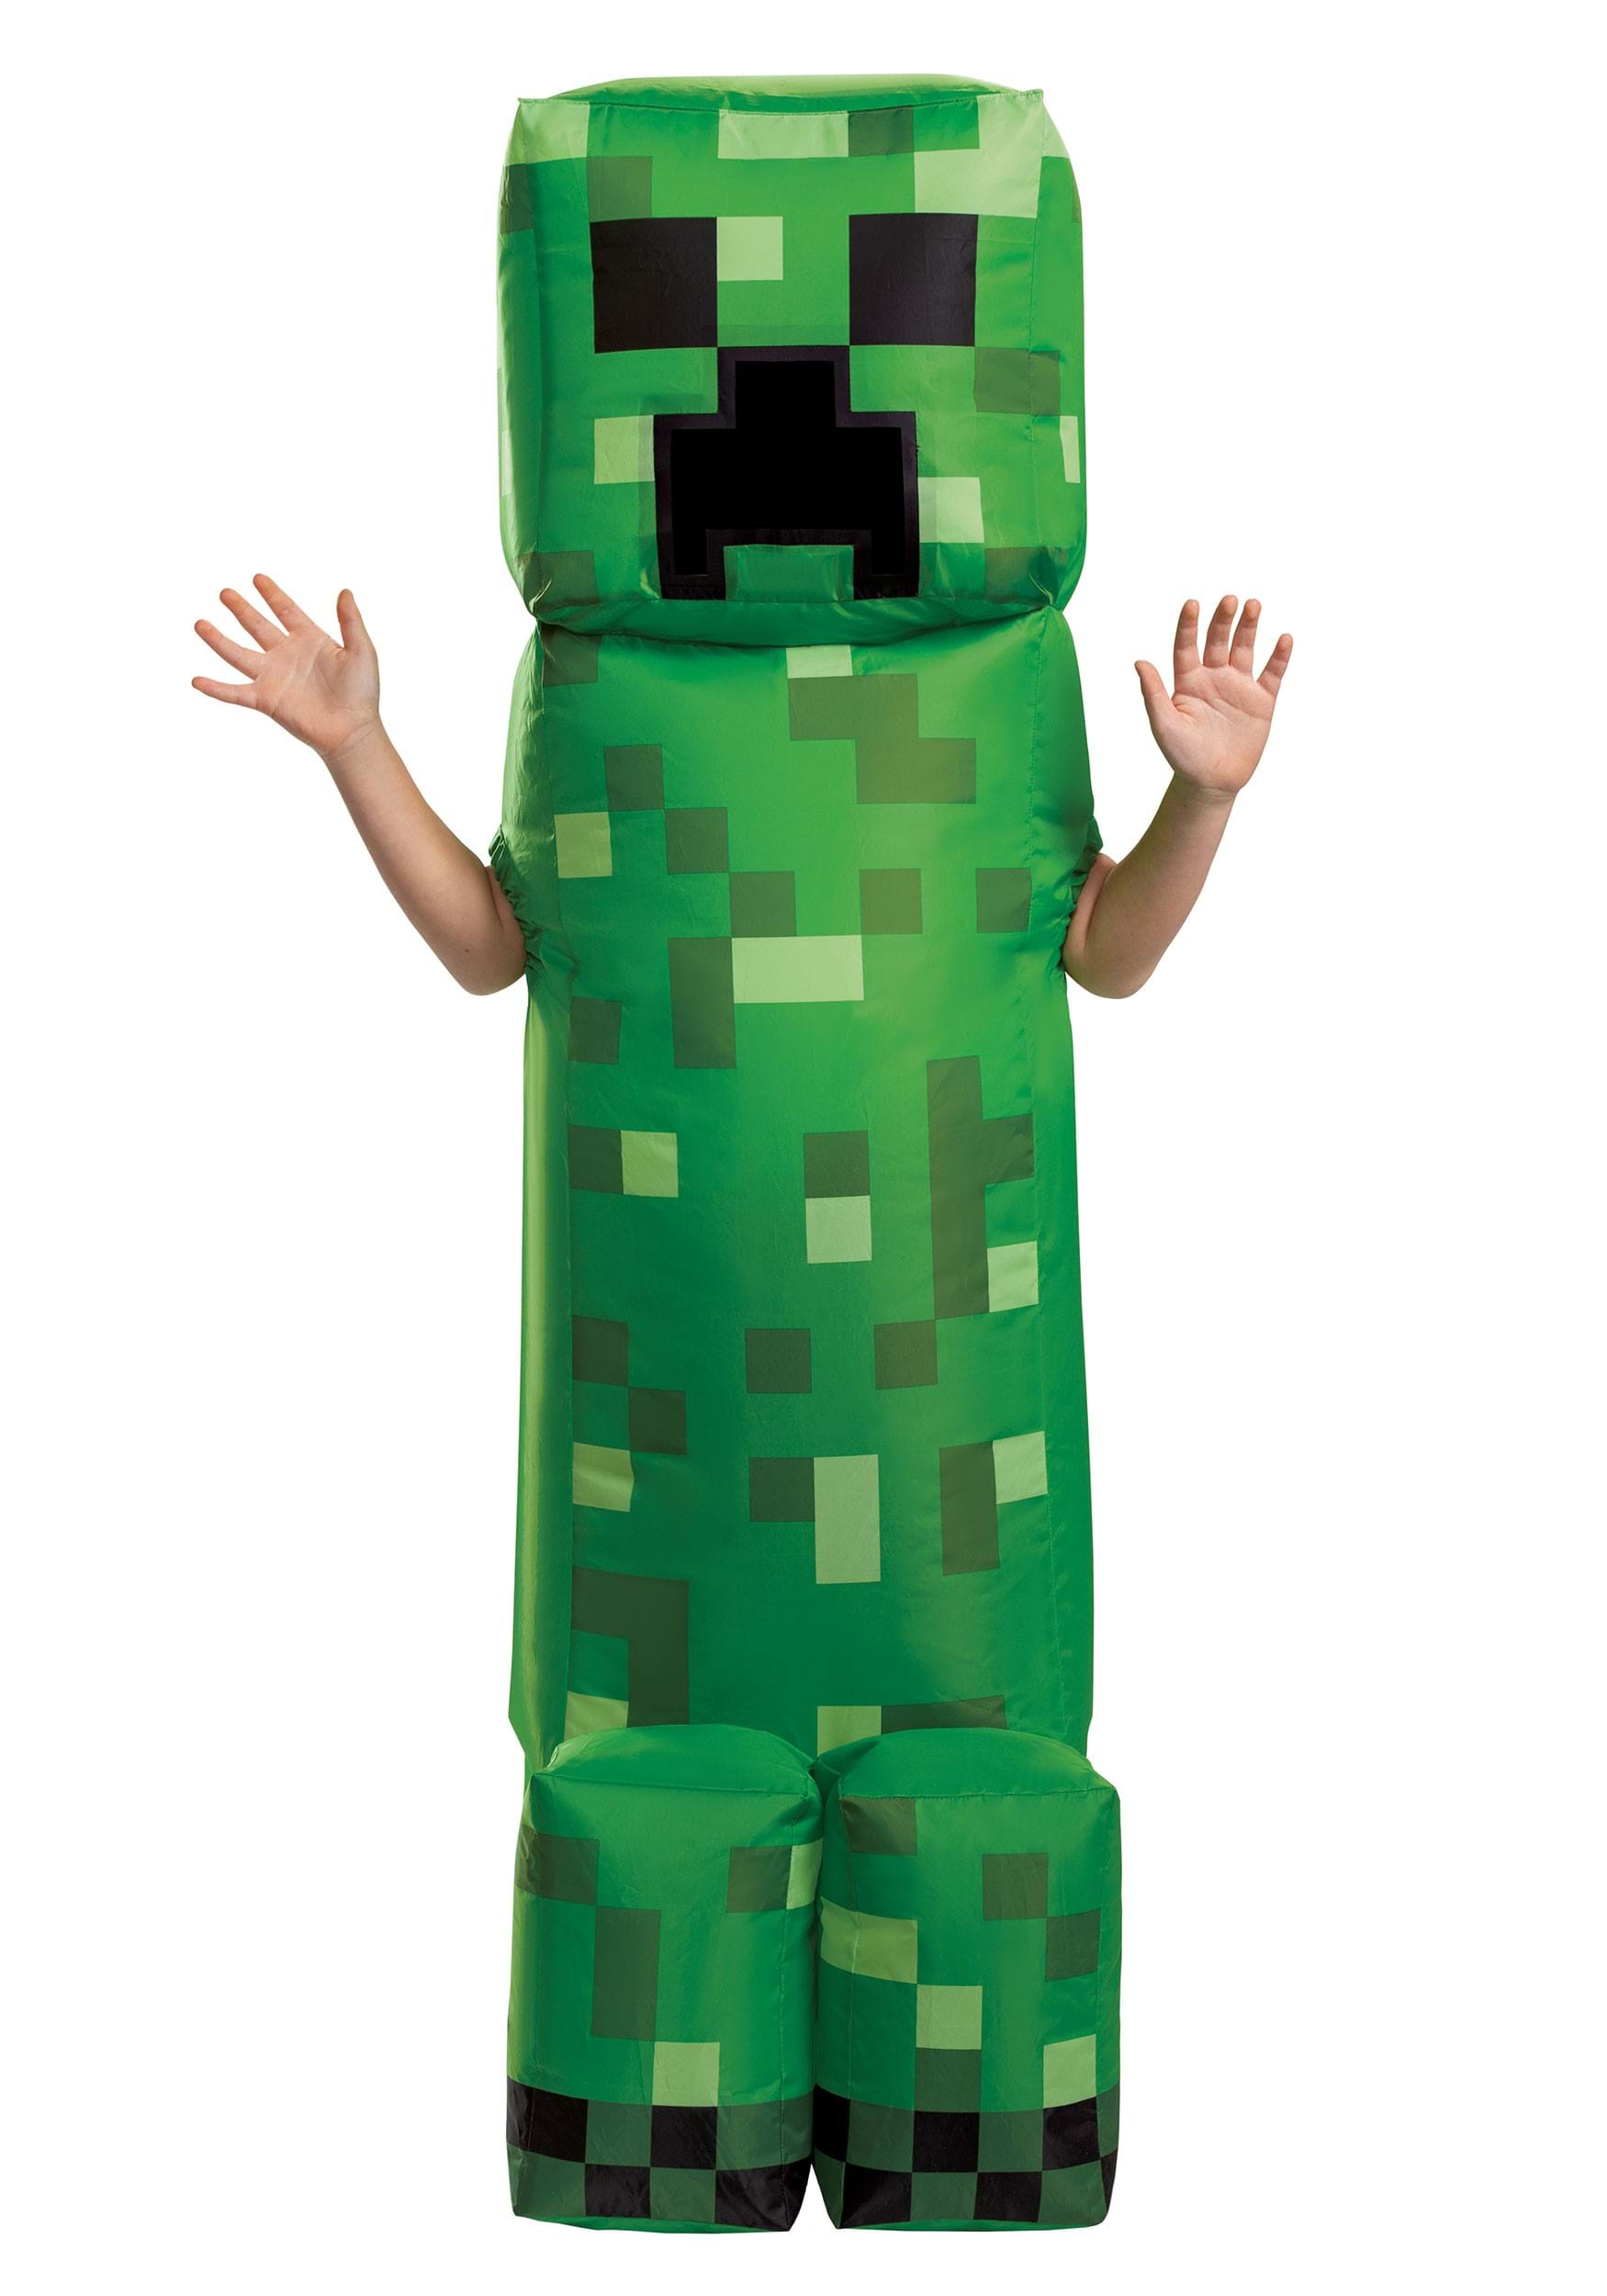 minecraft steve costume template